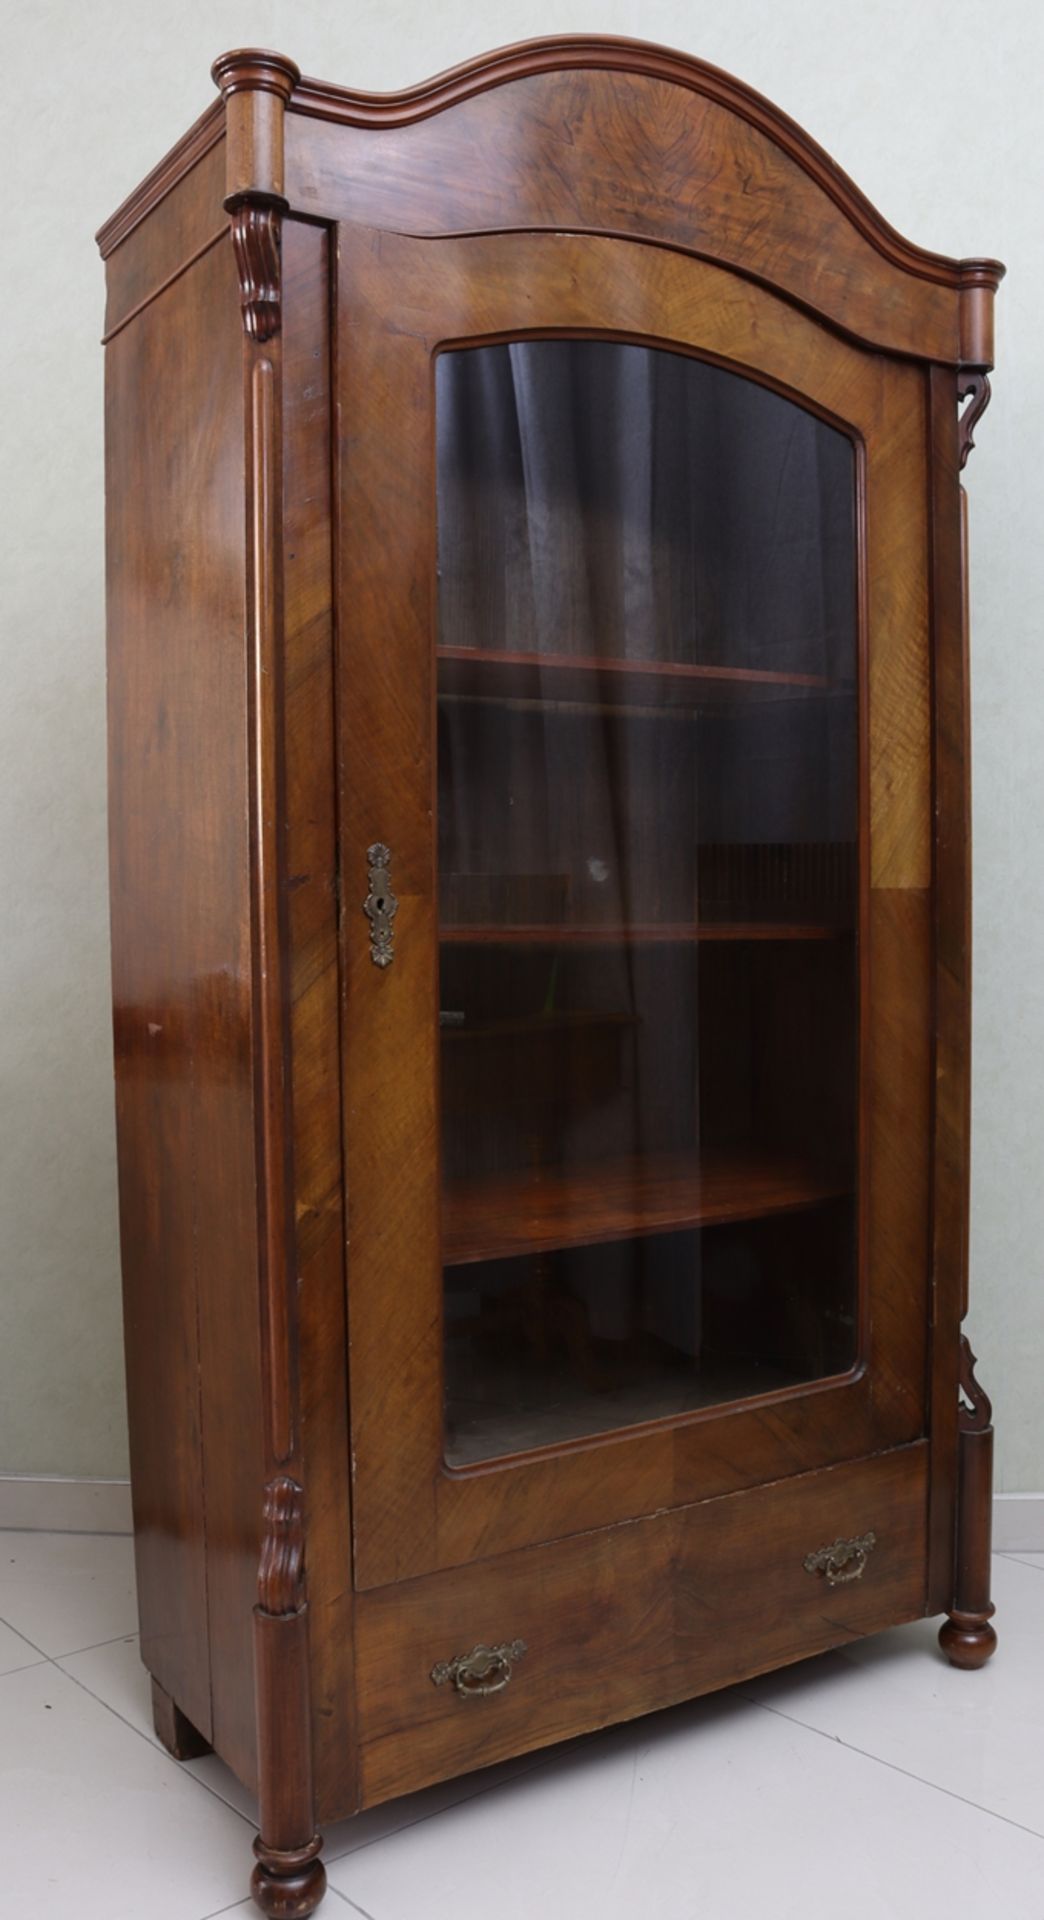 Single-door glass display cabinet circa 1860, Middle German - Image 2 of 2